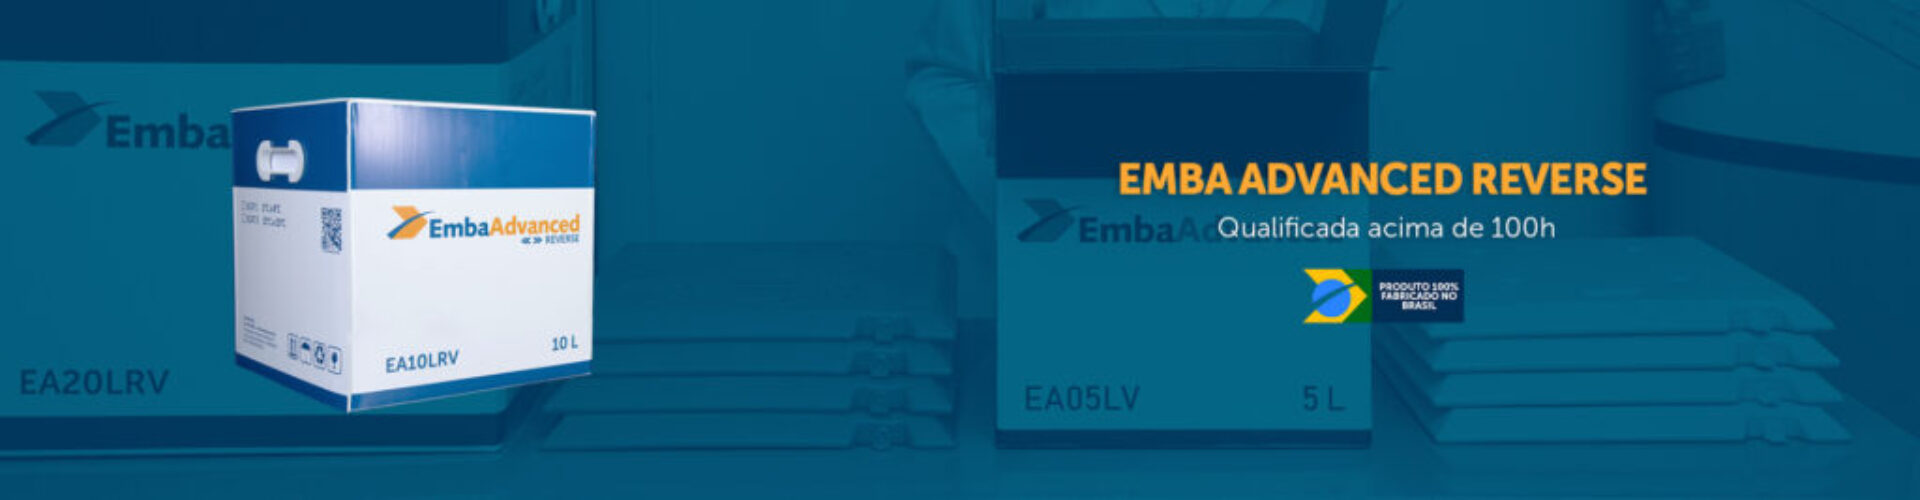 New Banner - Emba Advanced Reverse_02